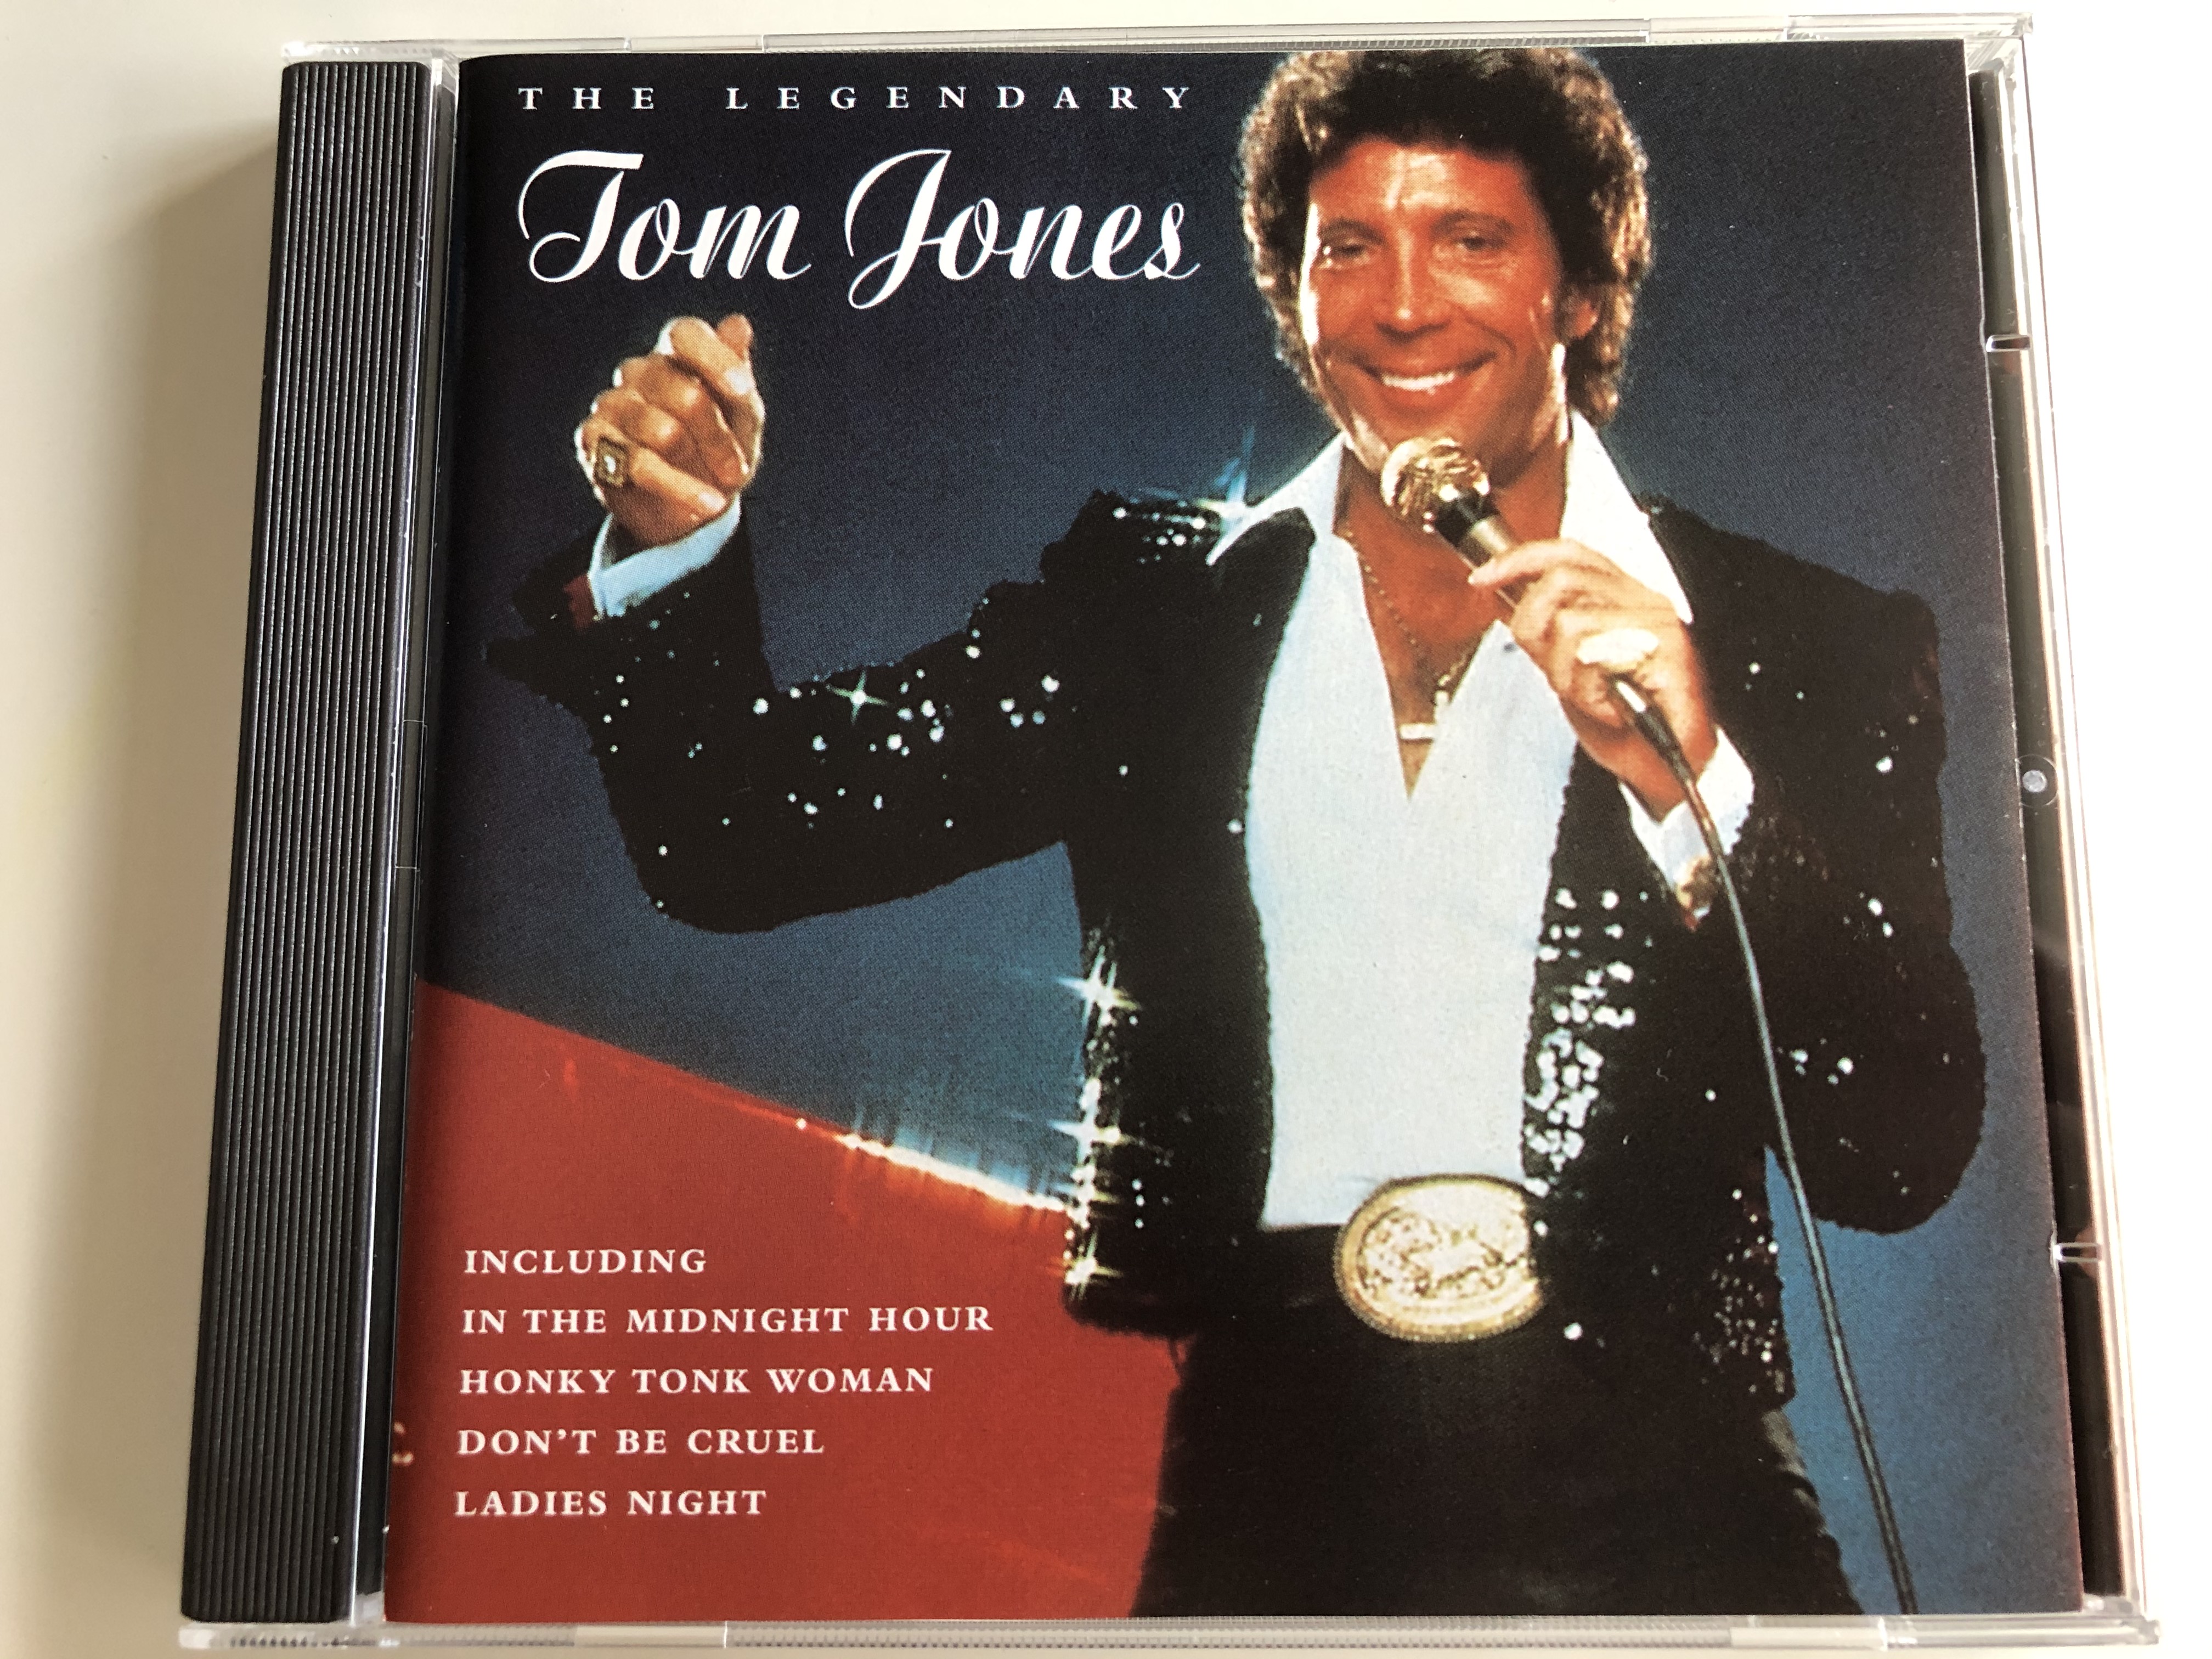 the-legendary-tom-jones-including-in-the-midnight-hour-honky-tonk-woman-don-t-be-cruel-ladies-night-pegasus-audio-cd-1999-peg-cd-200-1-.jpg